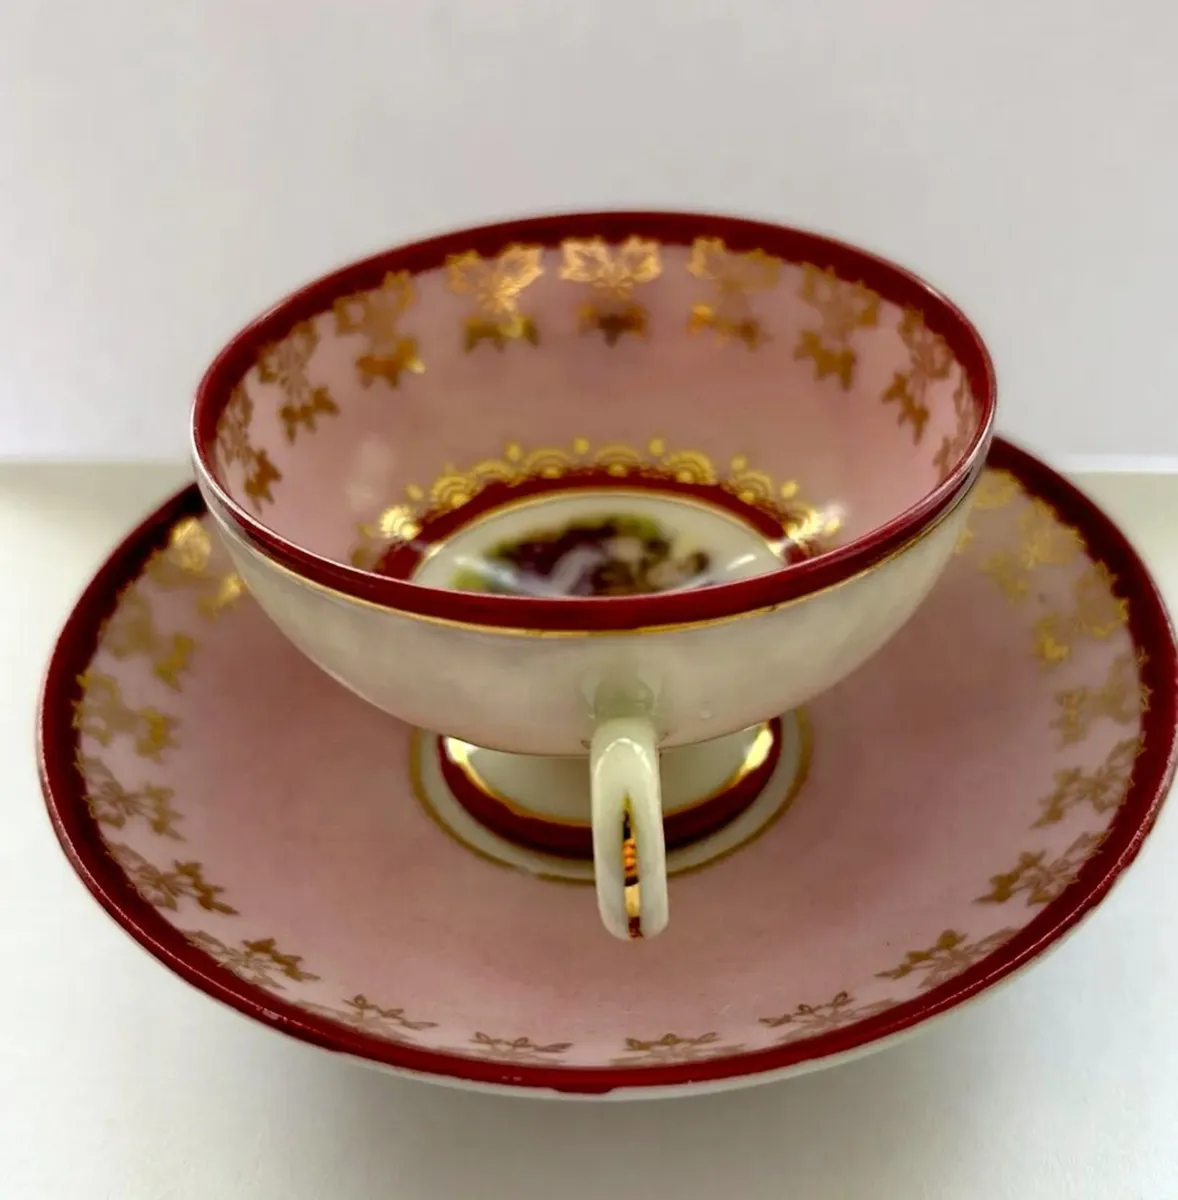 Antique Alt Wien cup and saucer - Image 1